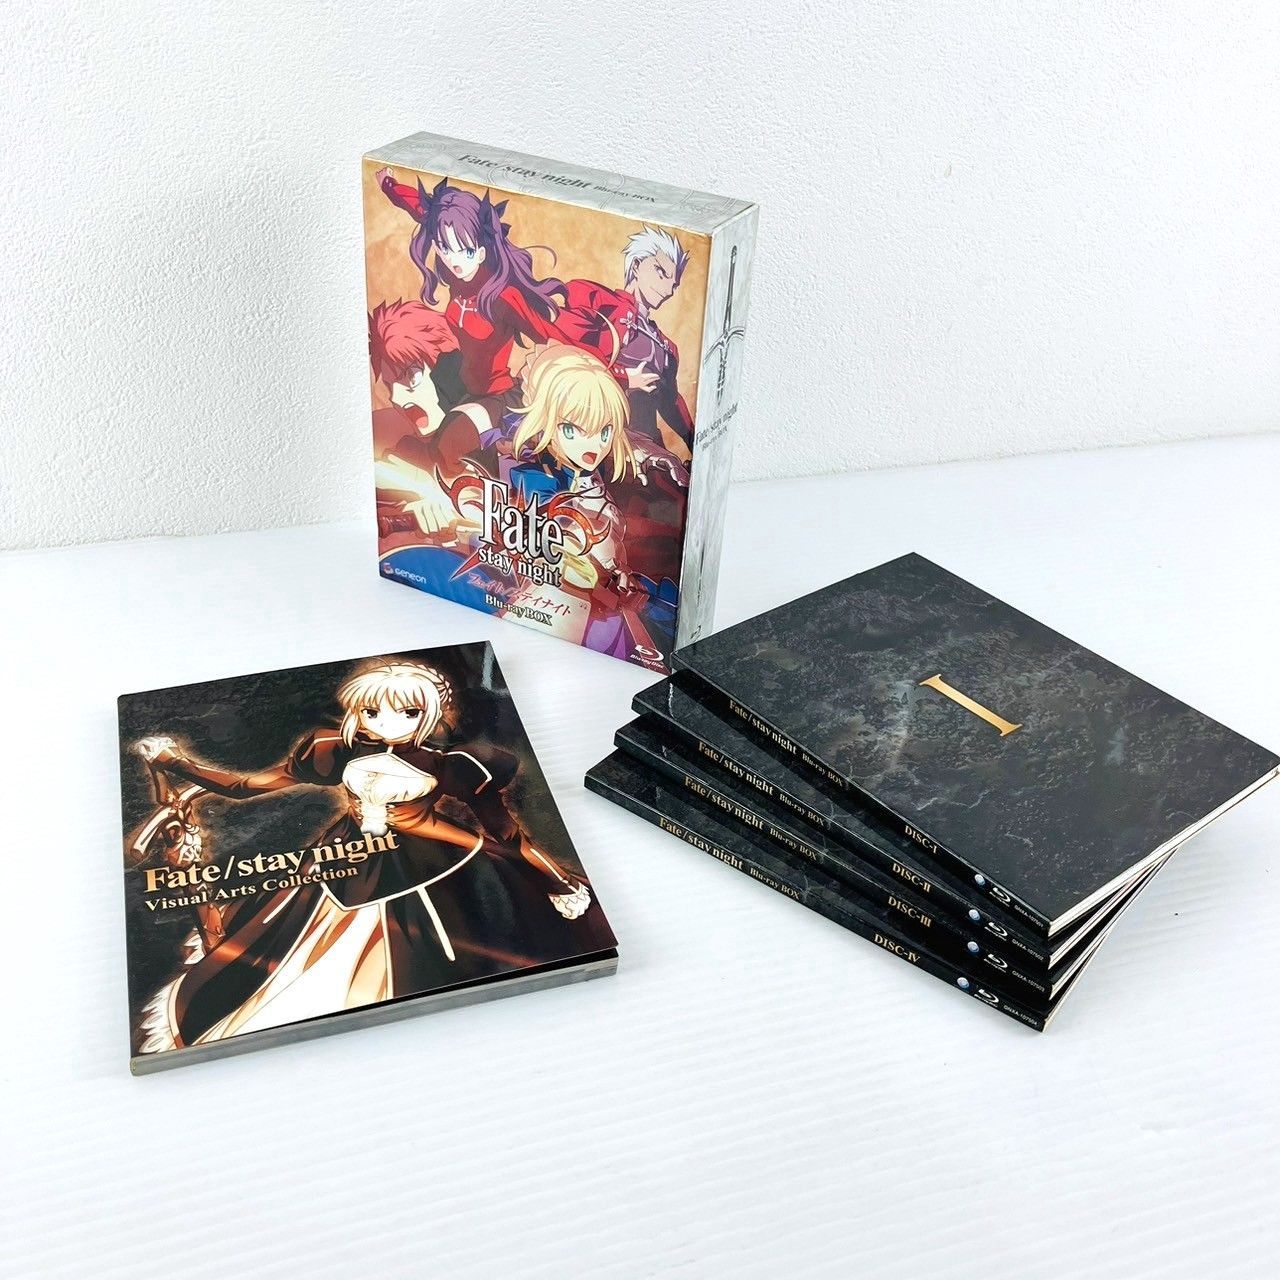 Fate/stay night Blu-rayboxセット | www.fitwellind.com